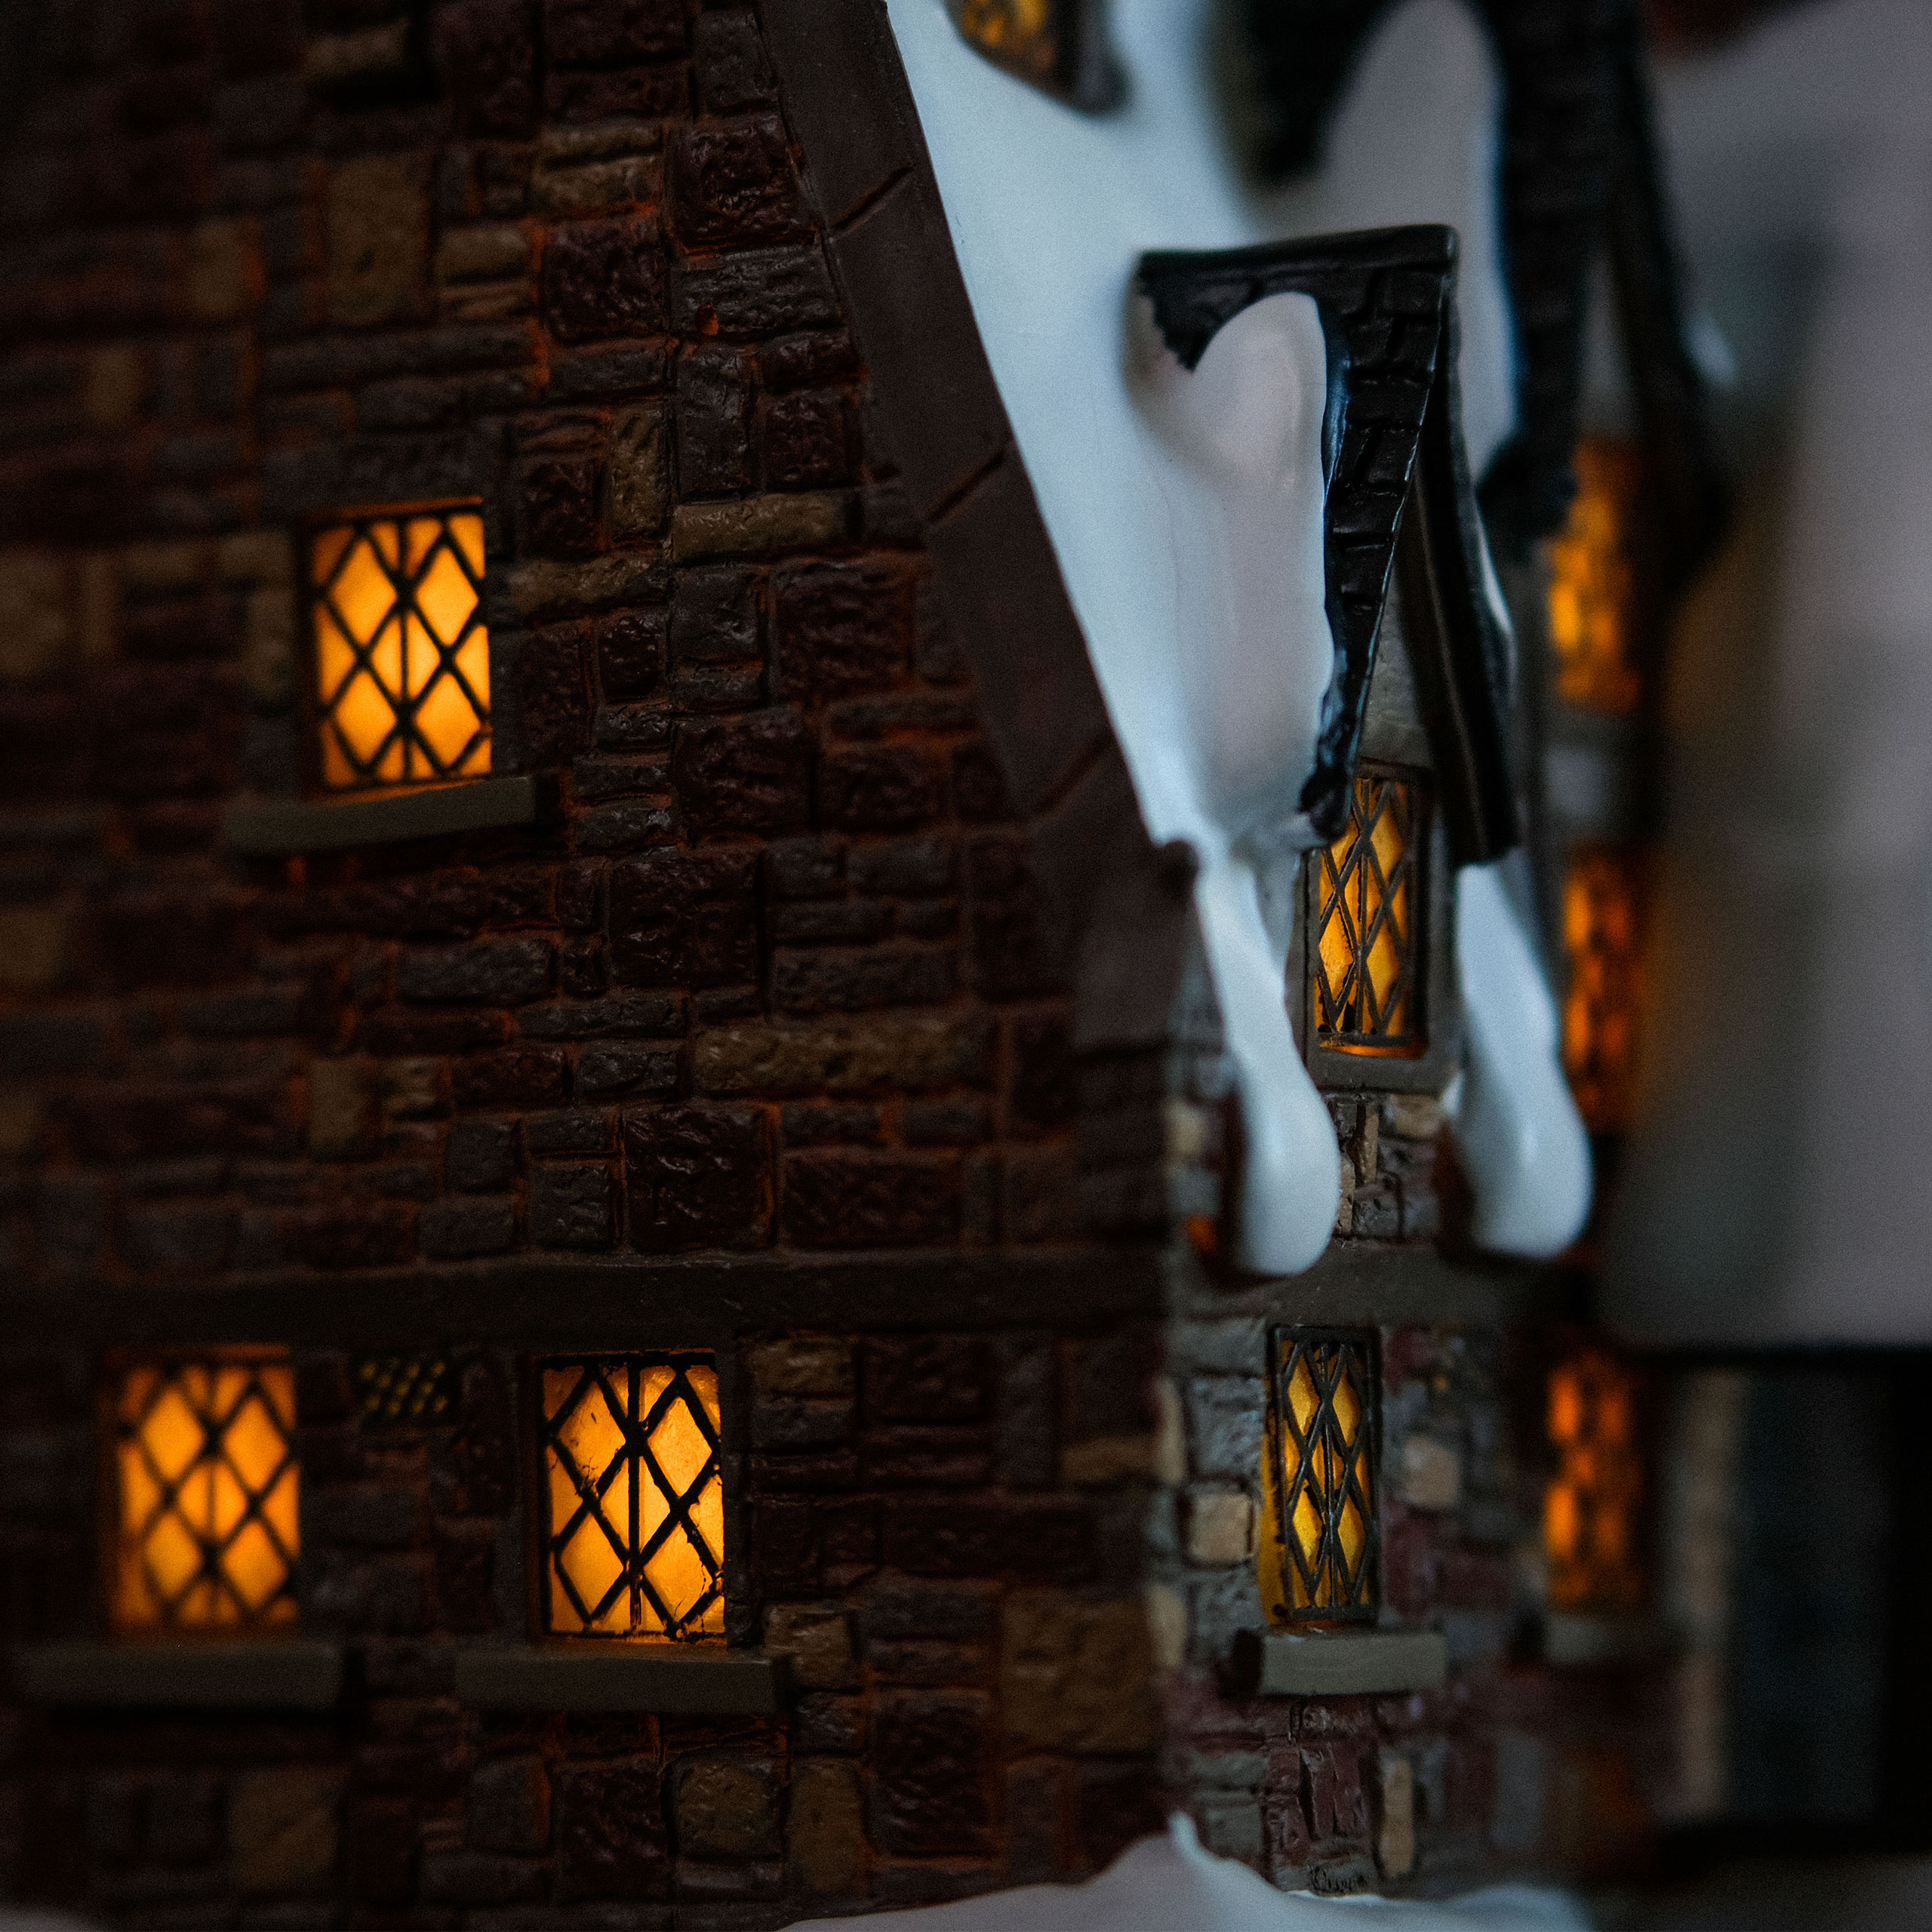 Three brooms miniature replica with lighting - Harry Potter